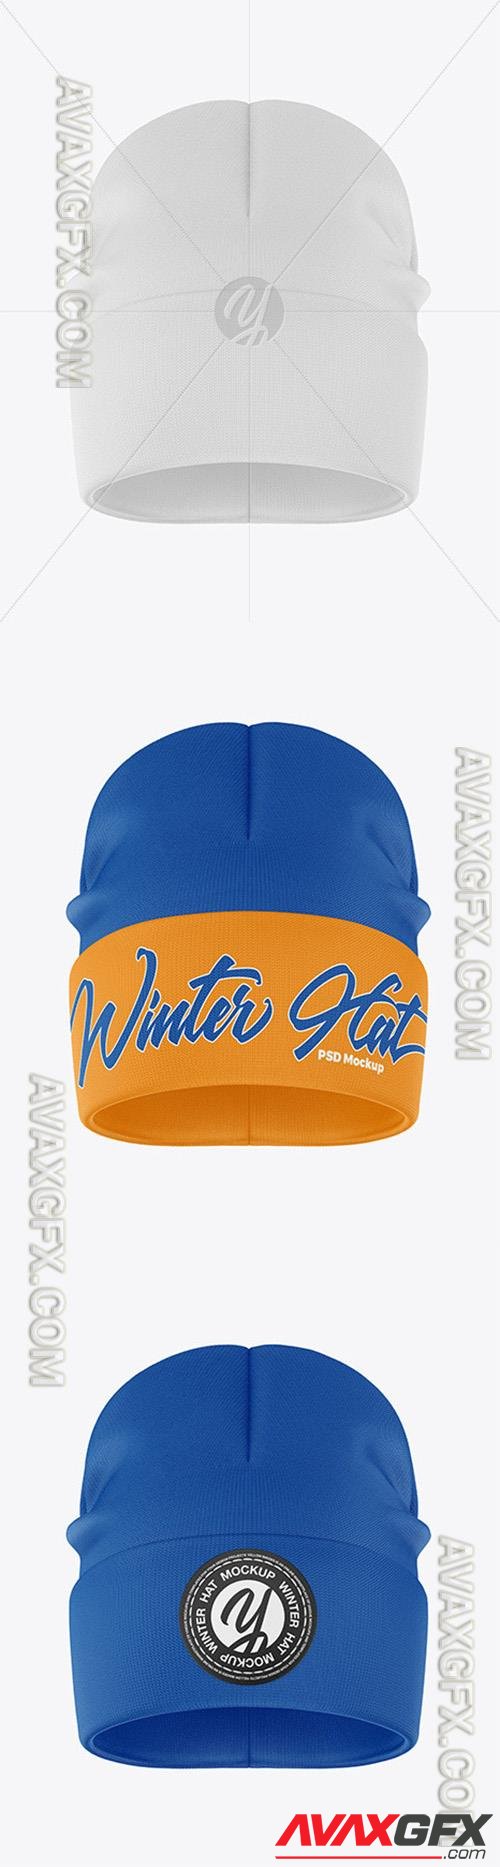 Winter Hat Mockup 91484